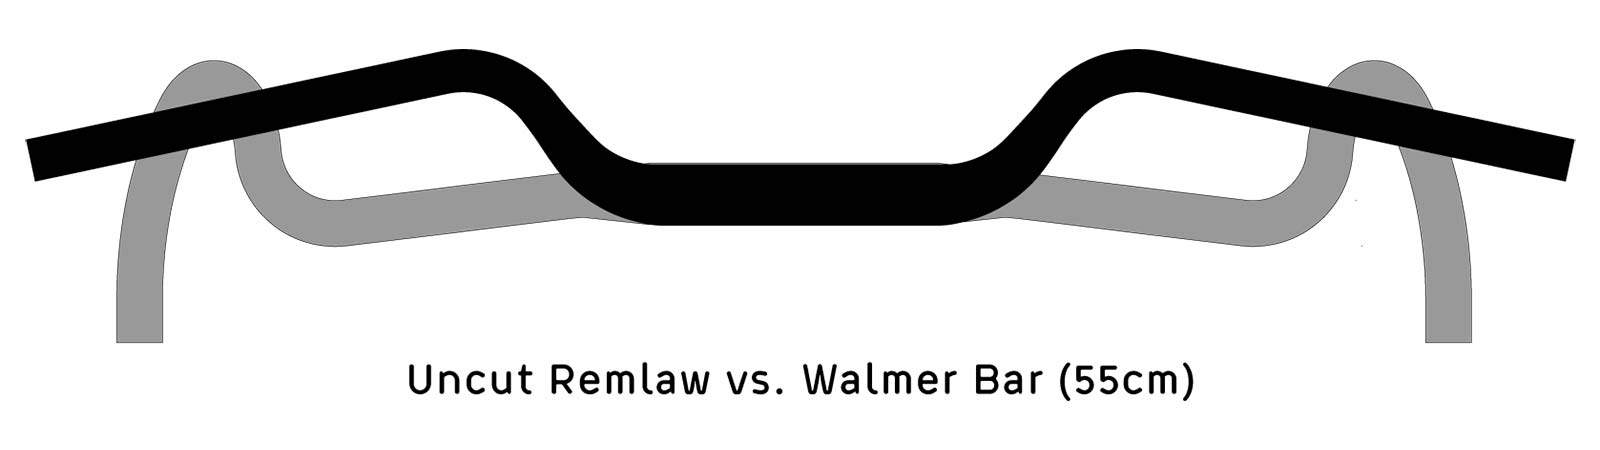 Curve Remlaw gravel adventure flat bar, forwardswept & backswept MTB bikepacking bar vs. Walmer dropbar